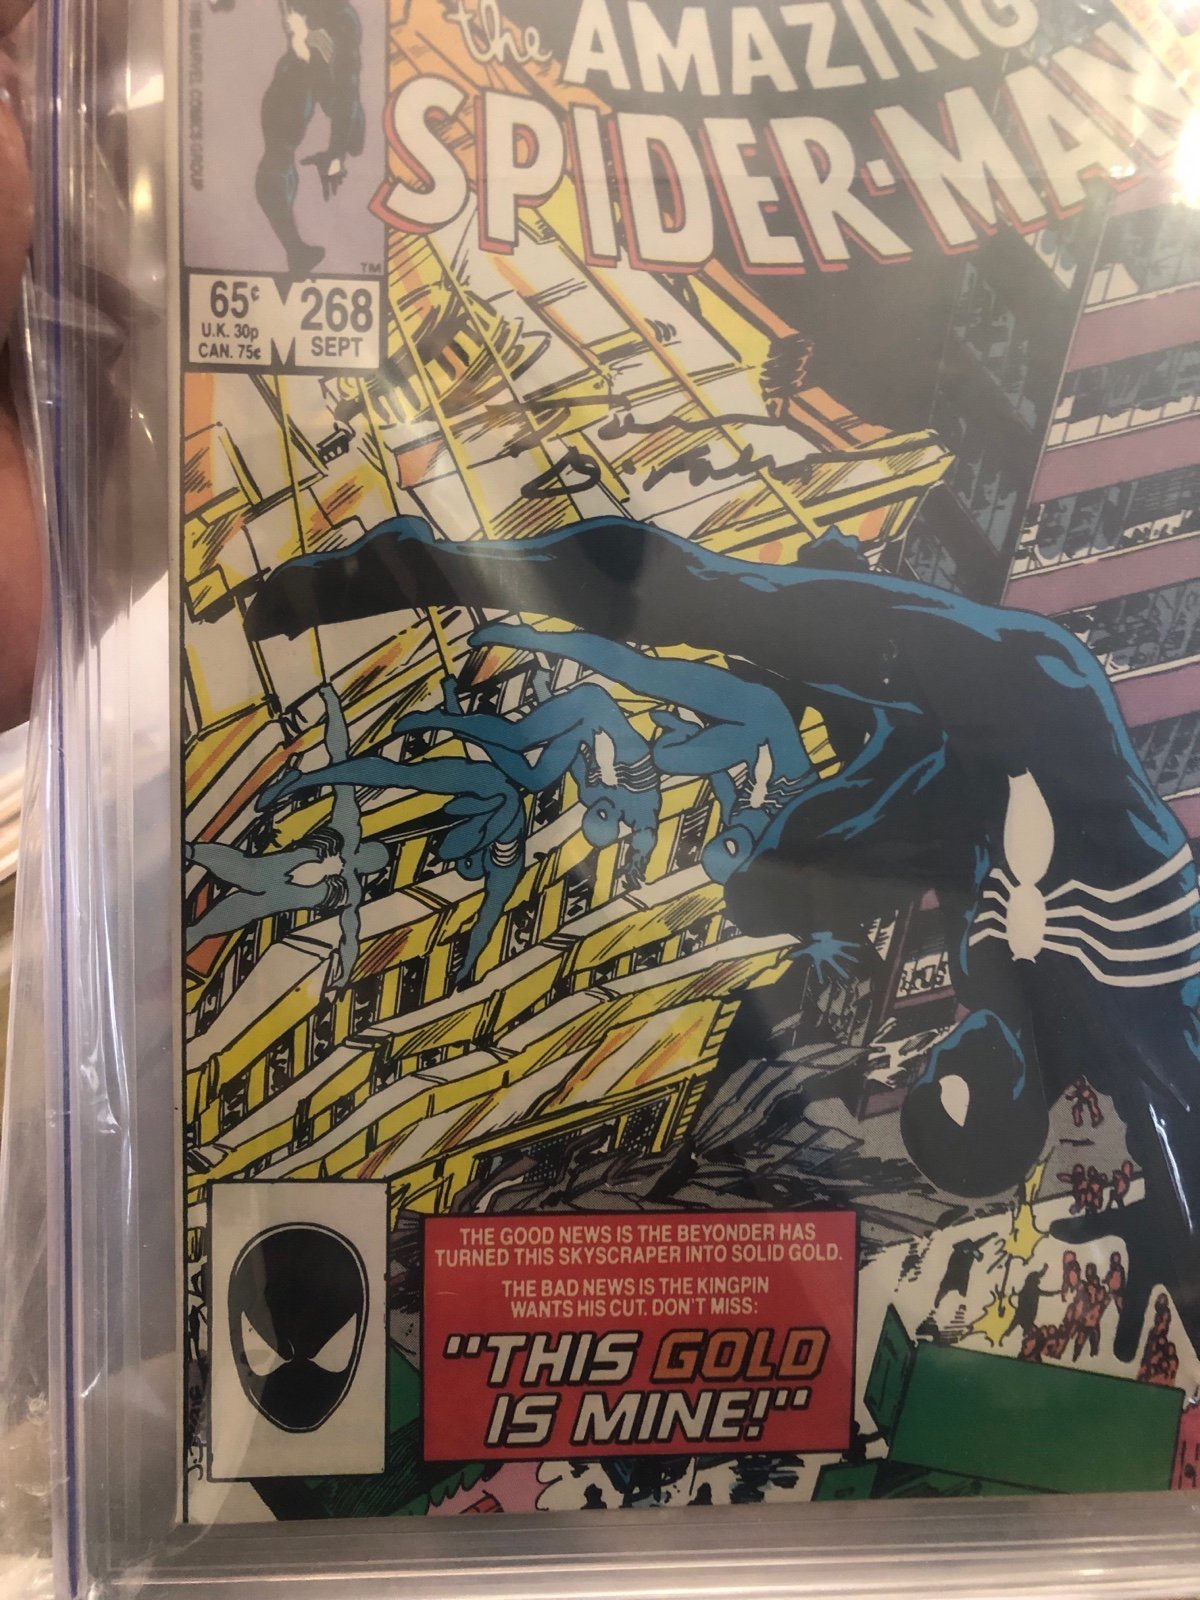 Amazing Spider-Man #268 09/1985 CGC 9.4 Signed By Tom Defalco GGtNZY5P5